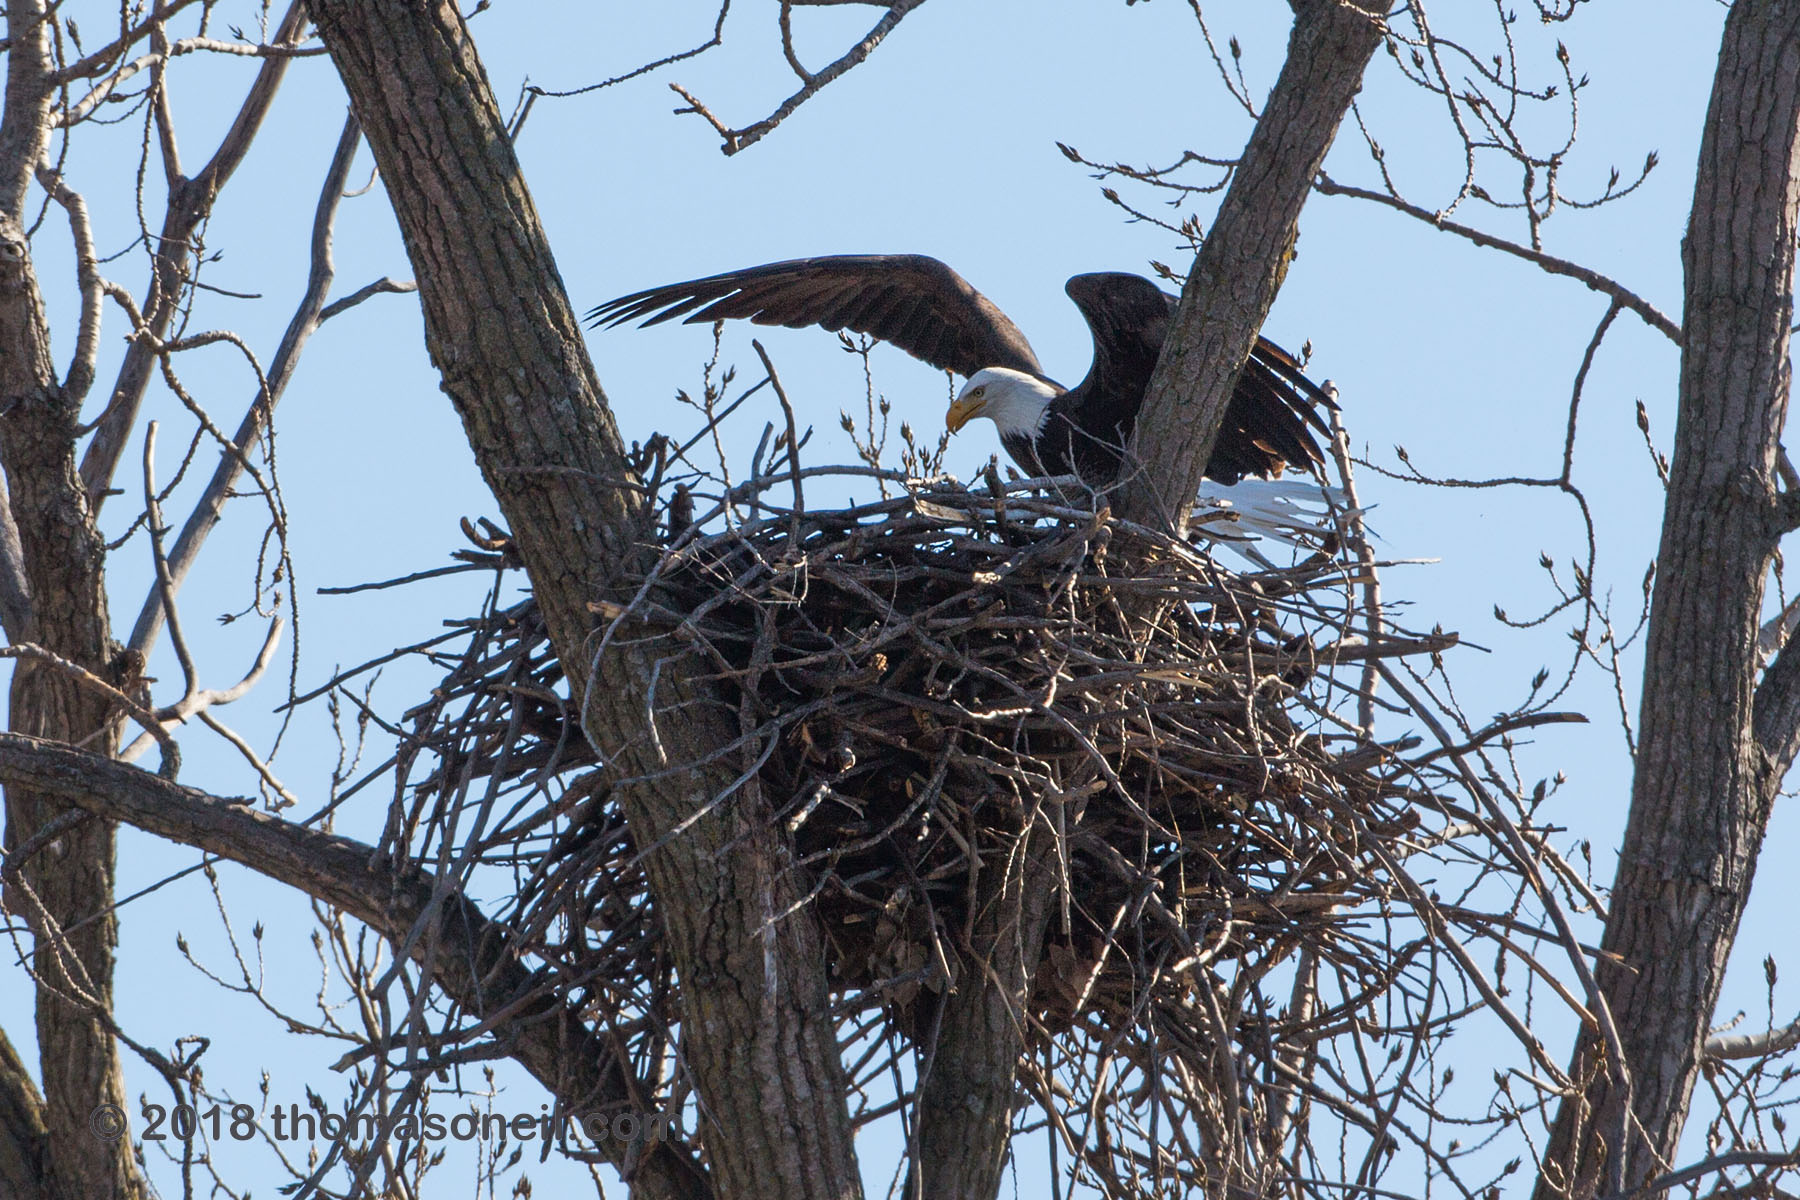 Bald eagle landing in nest, Loess Bluffs National Wildlife Refuge, Missouri, December 2018.  Click for next photo.